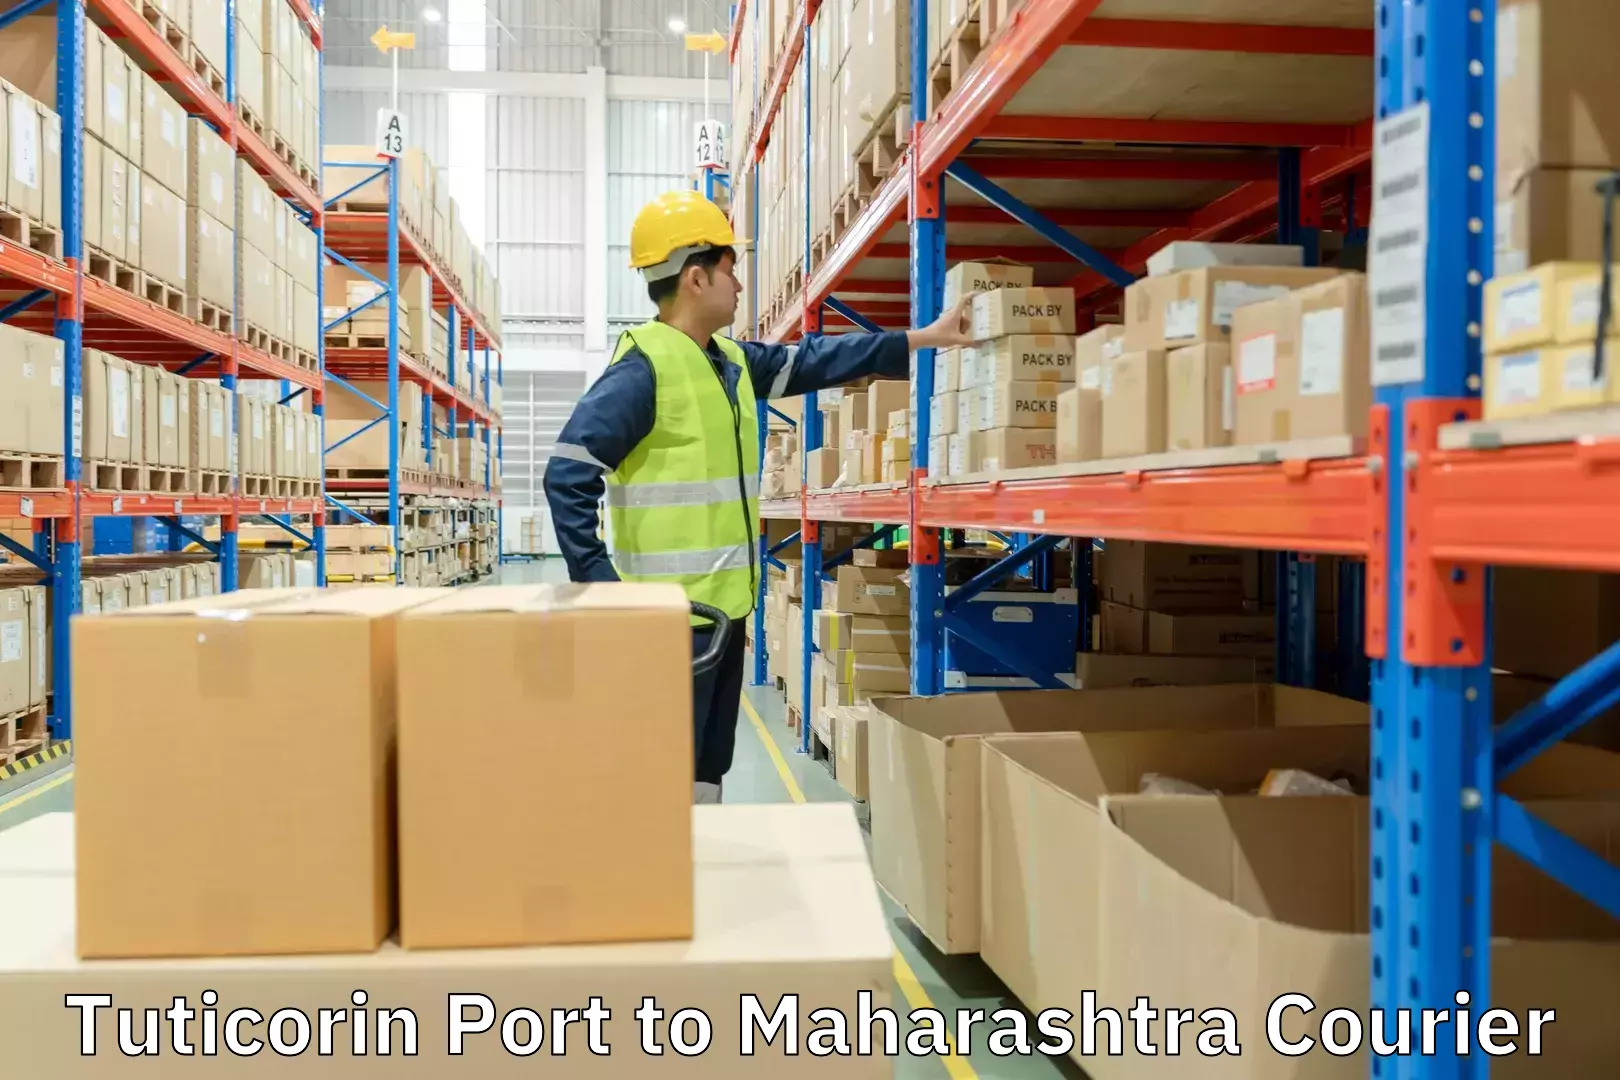 Express postal services Tuticorin Port to Maharashtra